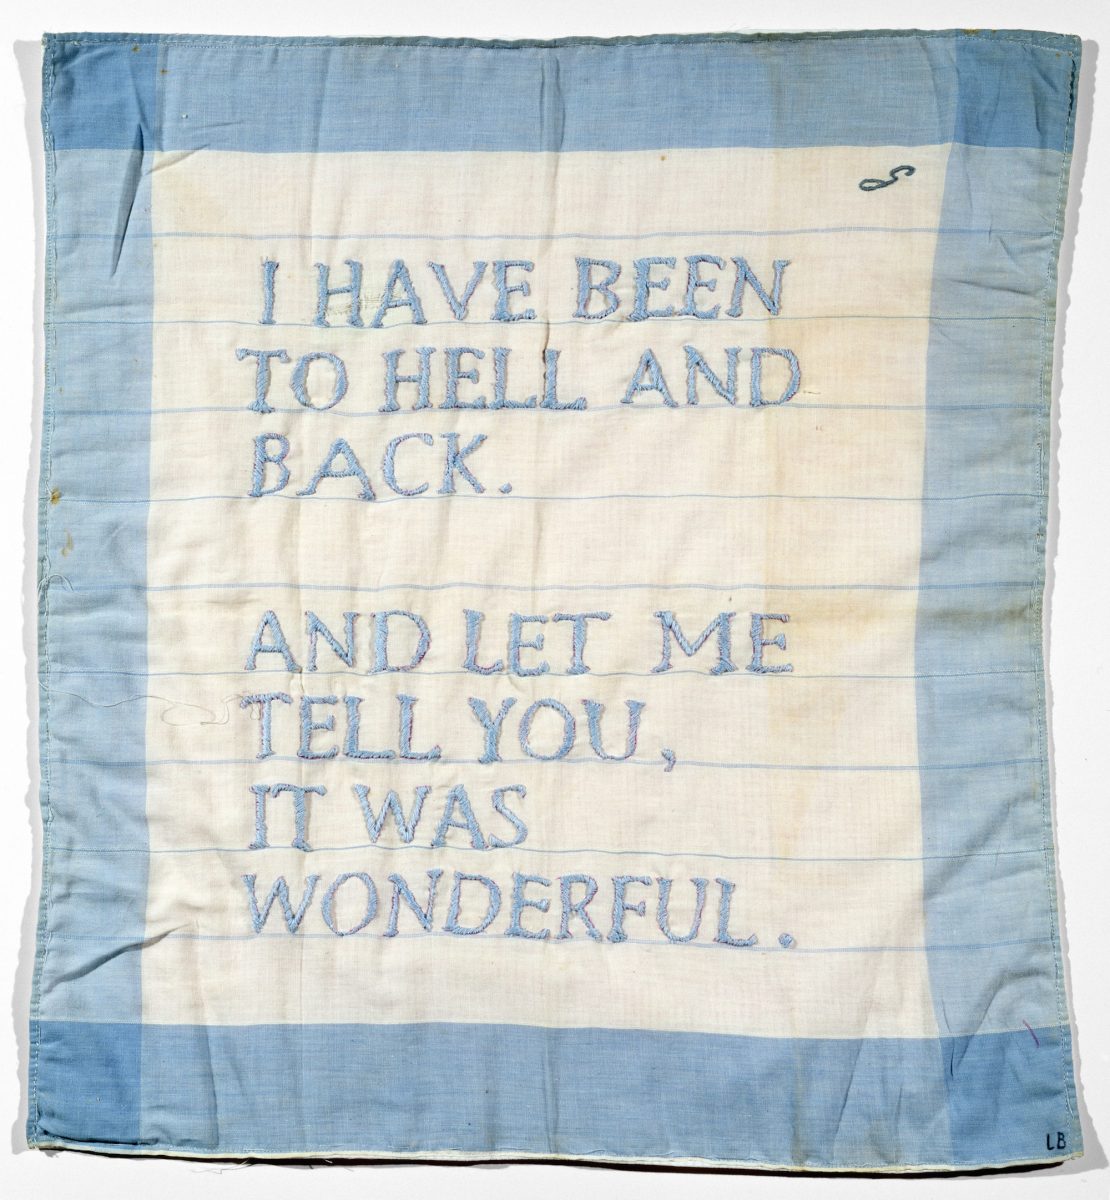 49.5 x 45.7; Embroidered handkerchief